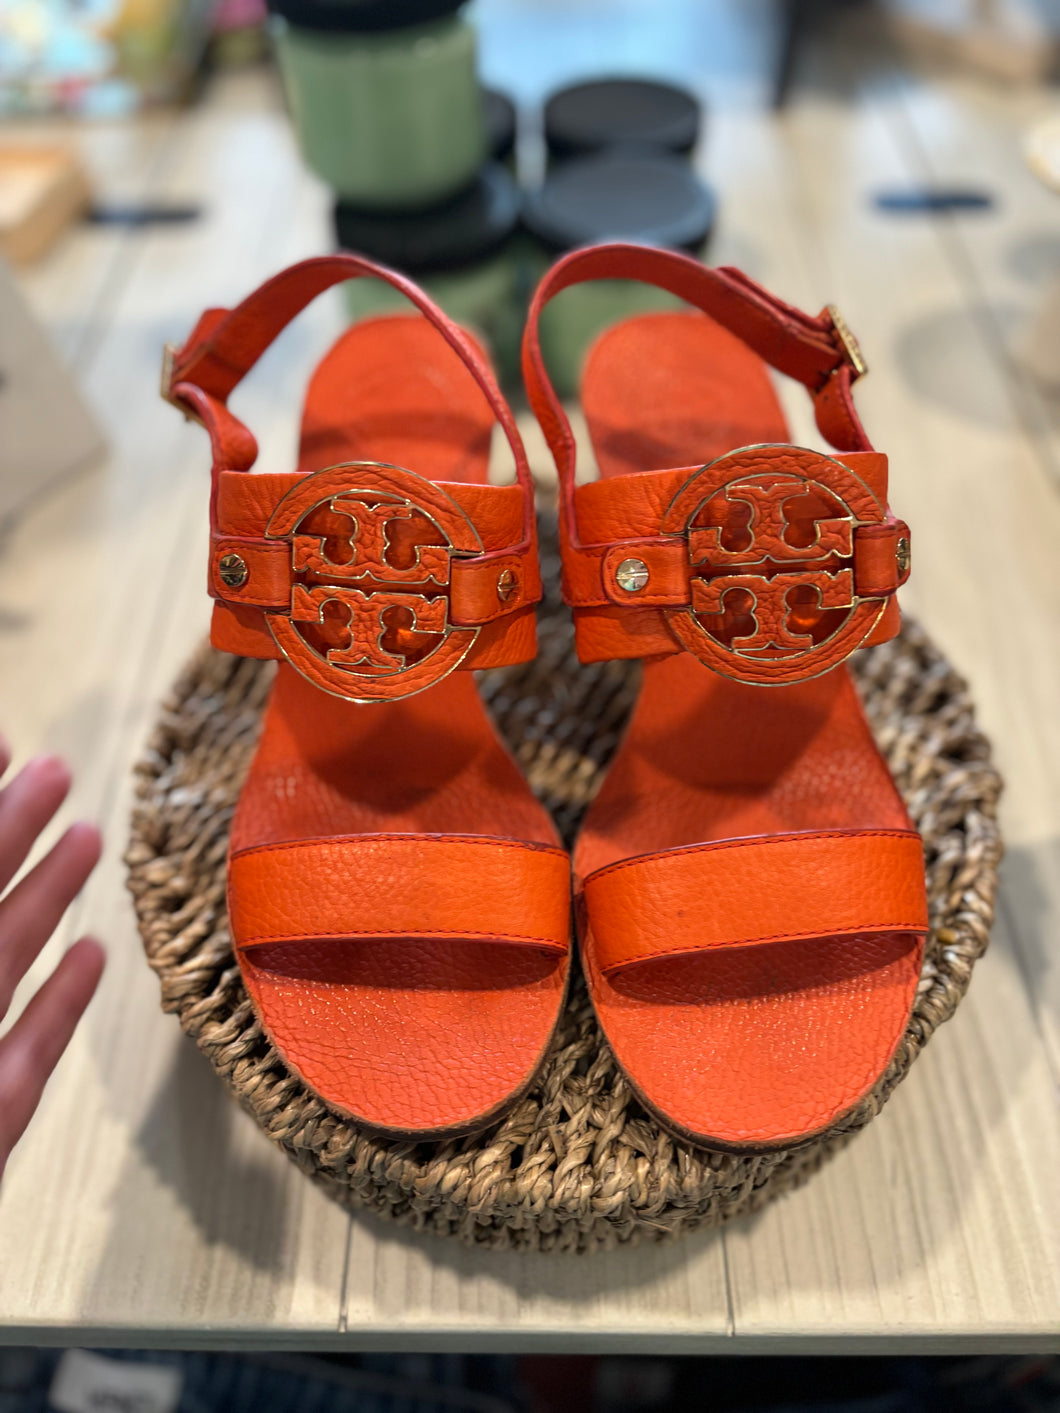 Tory Burch Orange Wedge Sandals